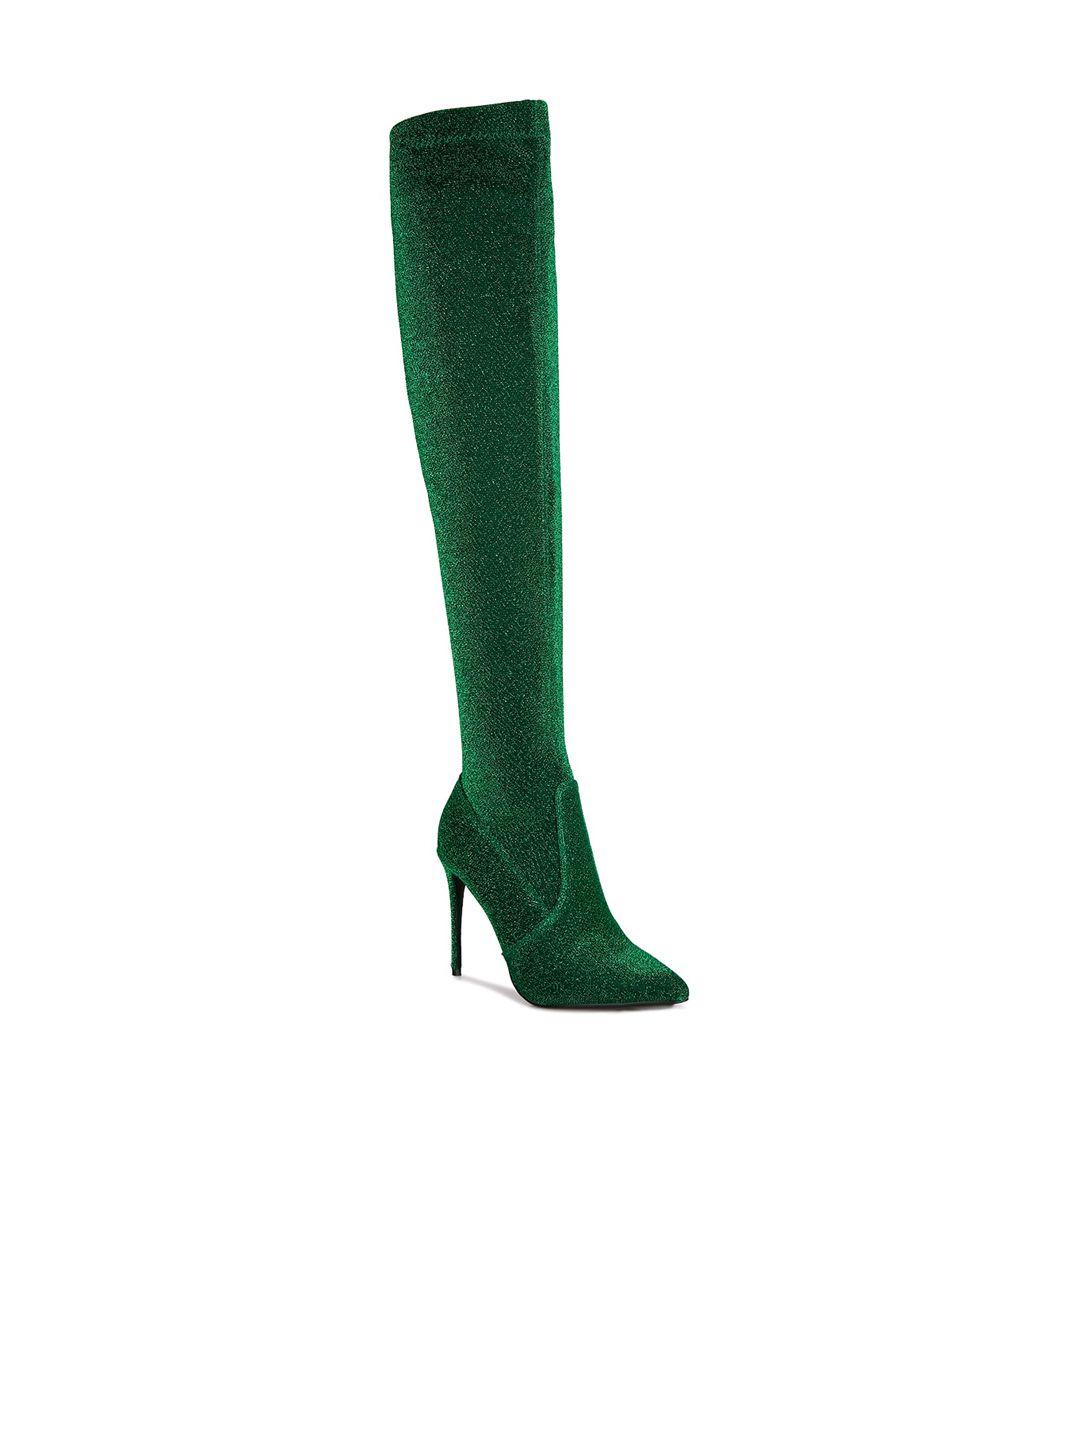 london rag women embellished high-top stiletto winter boots